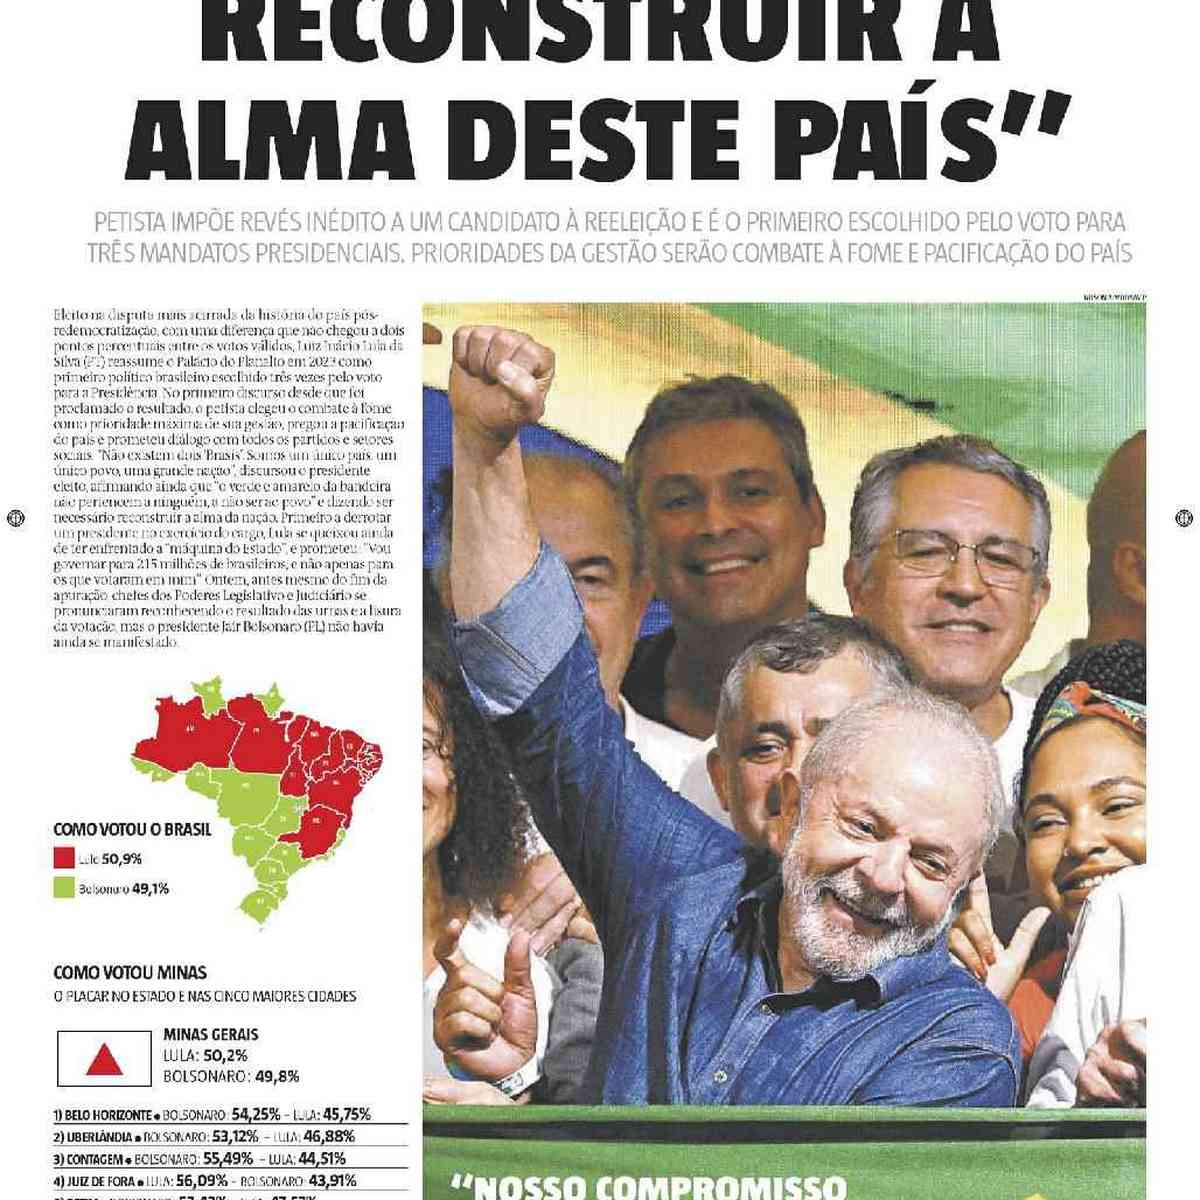 Confira a Capa do Jornal Estado de Minas do dia 31/07/2018